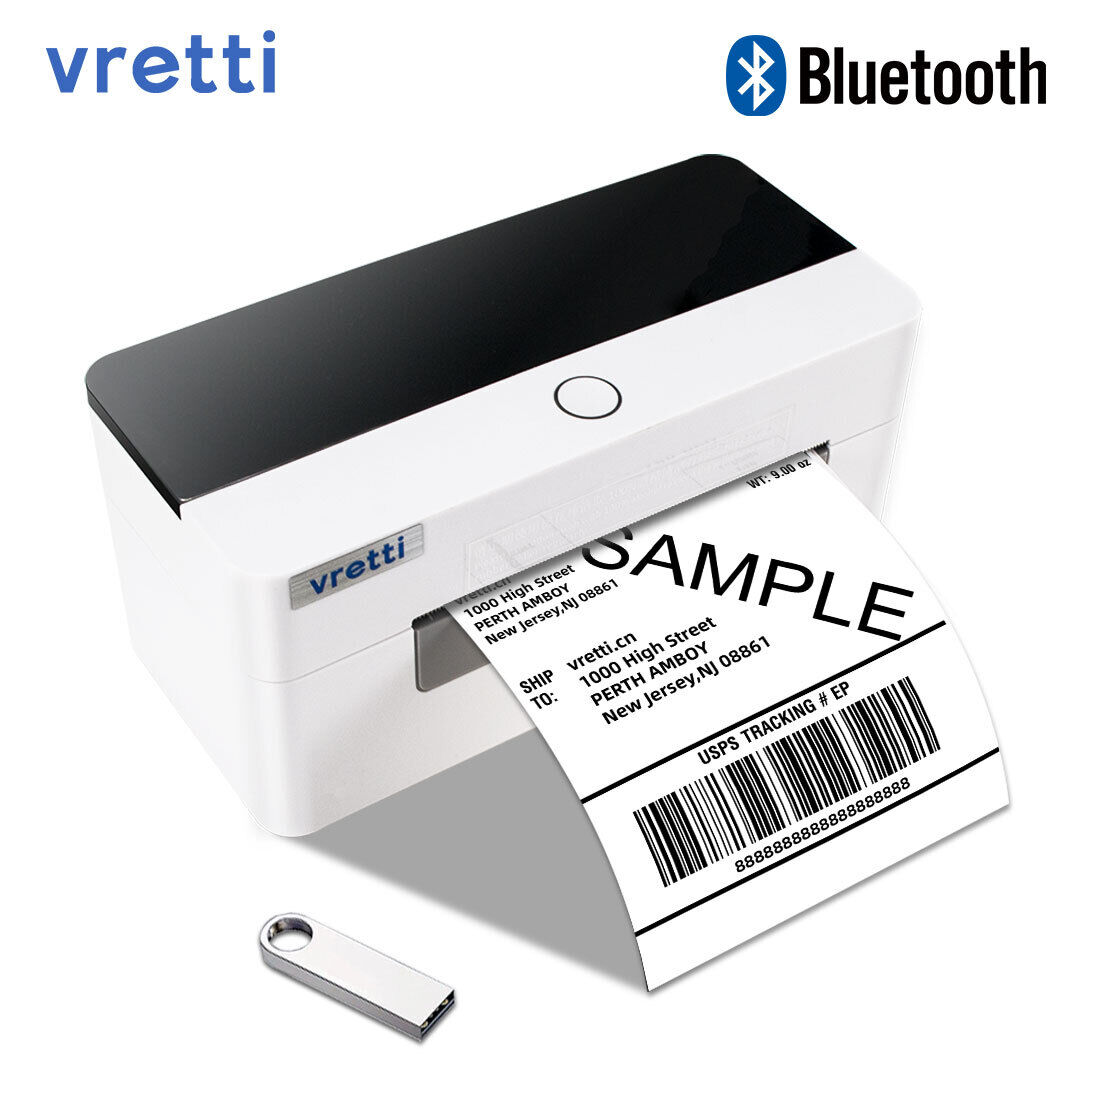 VRETTI Thermal Label Printer 4x6 Bluetooth Printer For eBay Etsy Amazon UPS